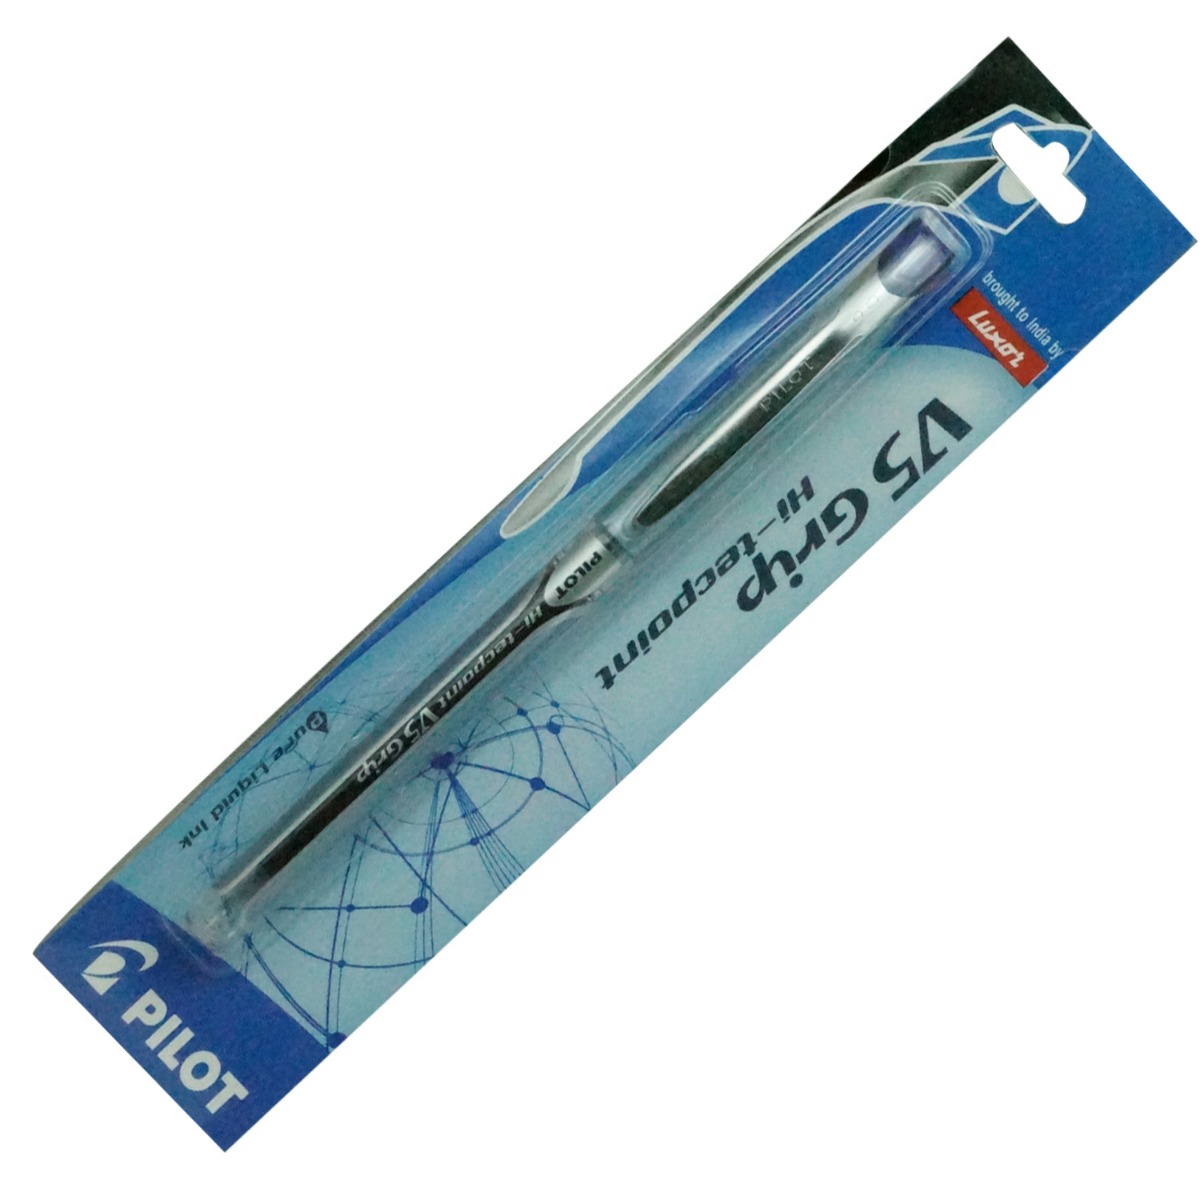 Pilot  Luxor  V7 Grip Hi-Tecpoint Model:16289 Blue Color Body With 0.5mm Tip Smooth Writing Gel Pen